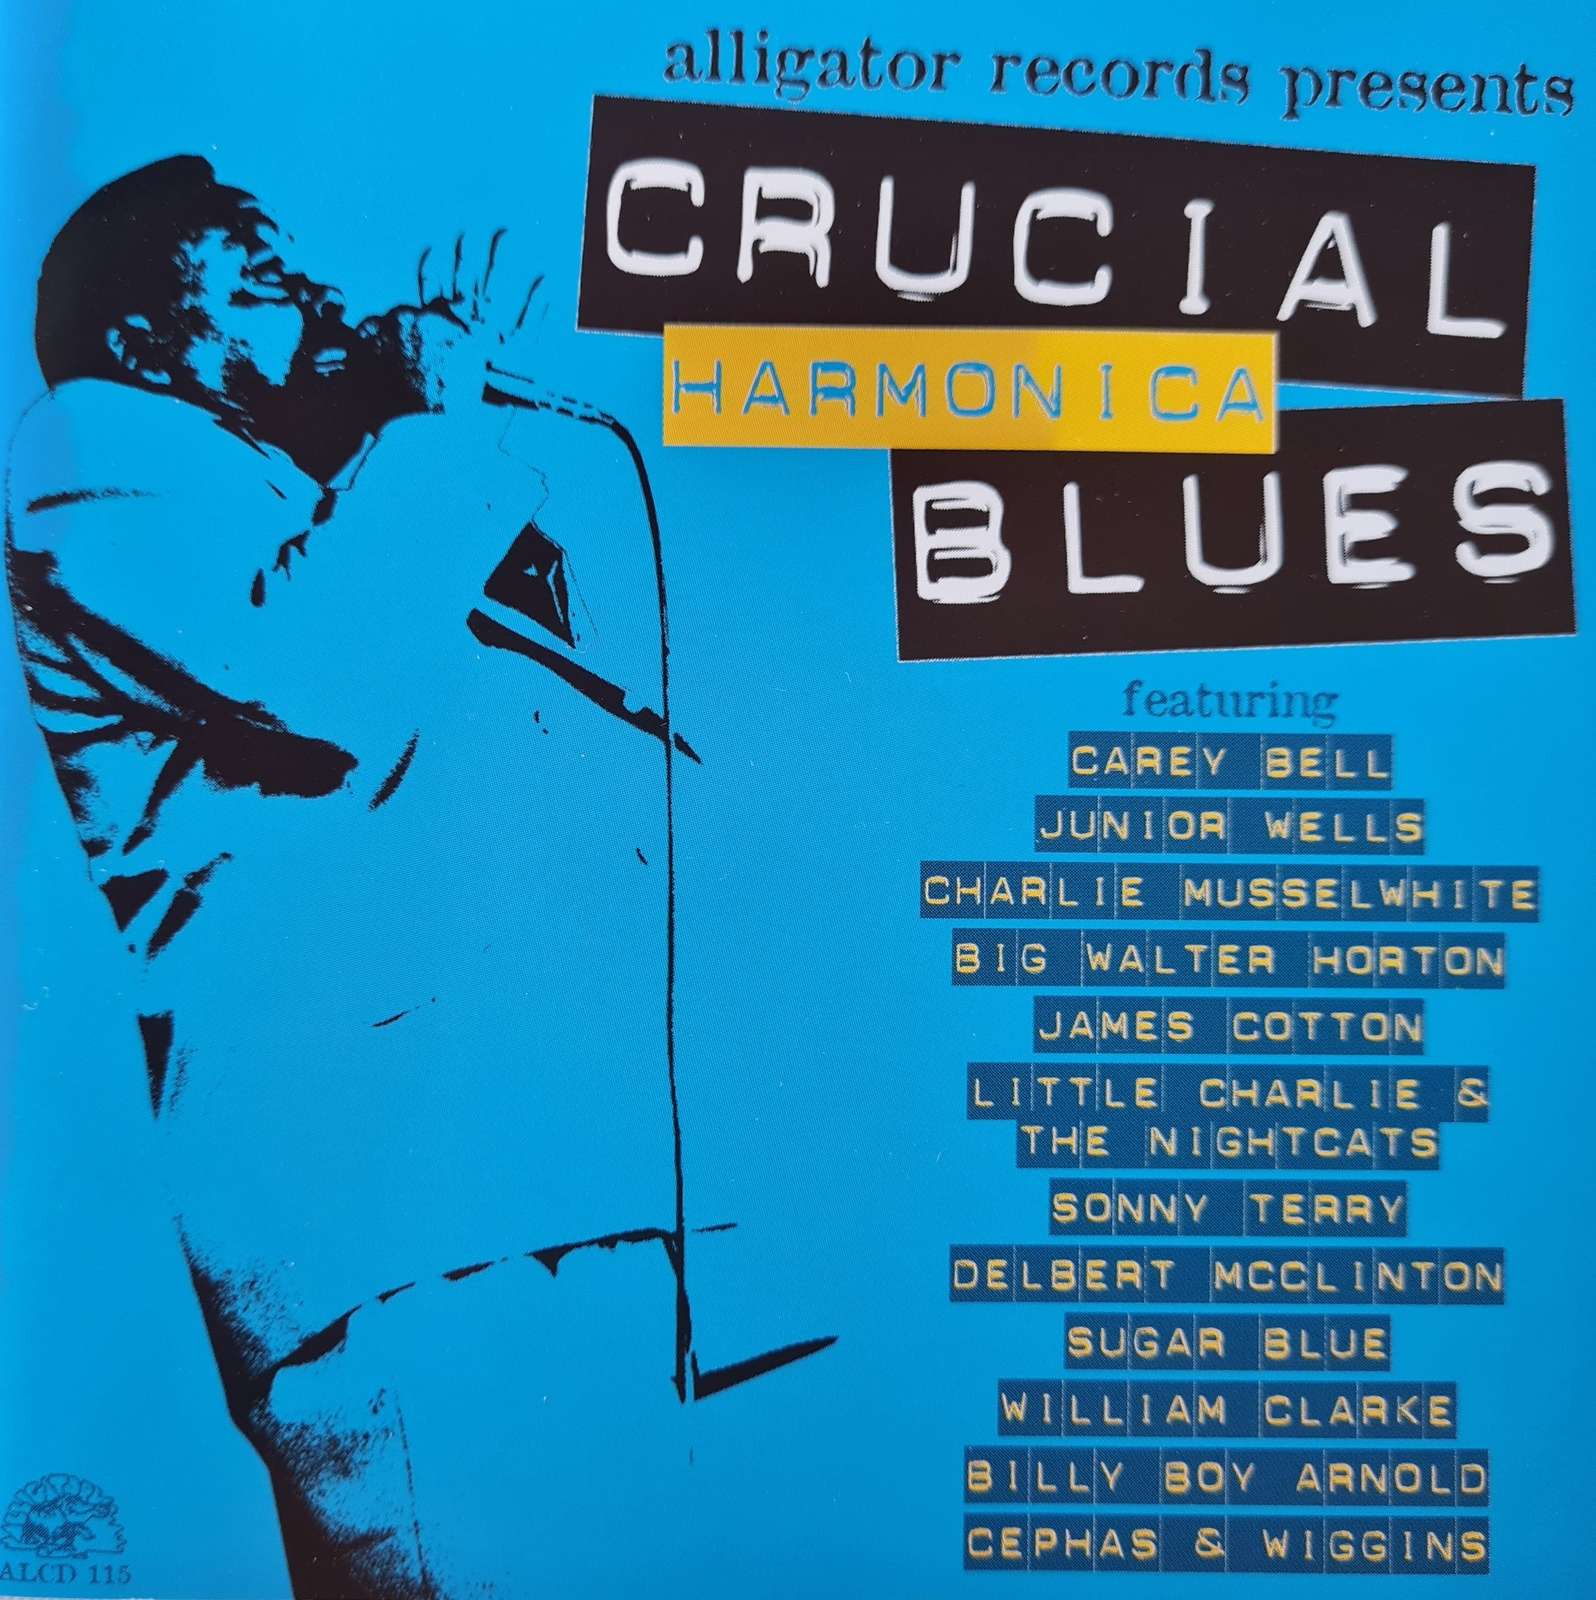 Alligator Records - Crucial Harmonica Blues (CD)